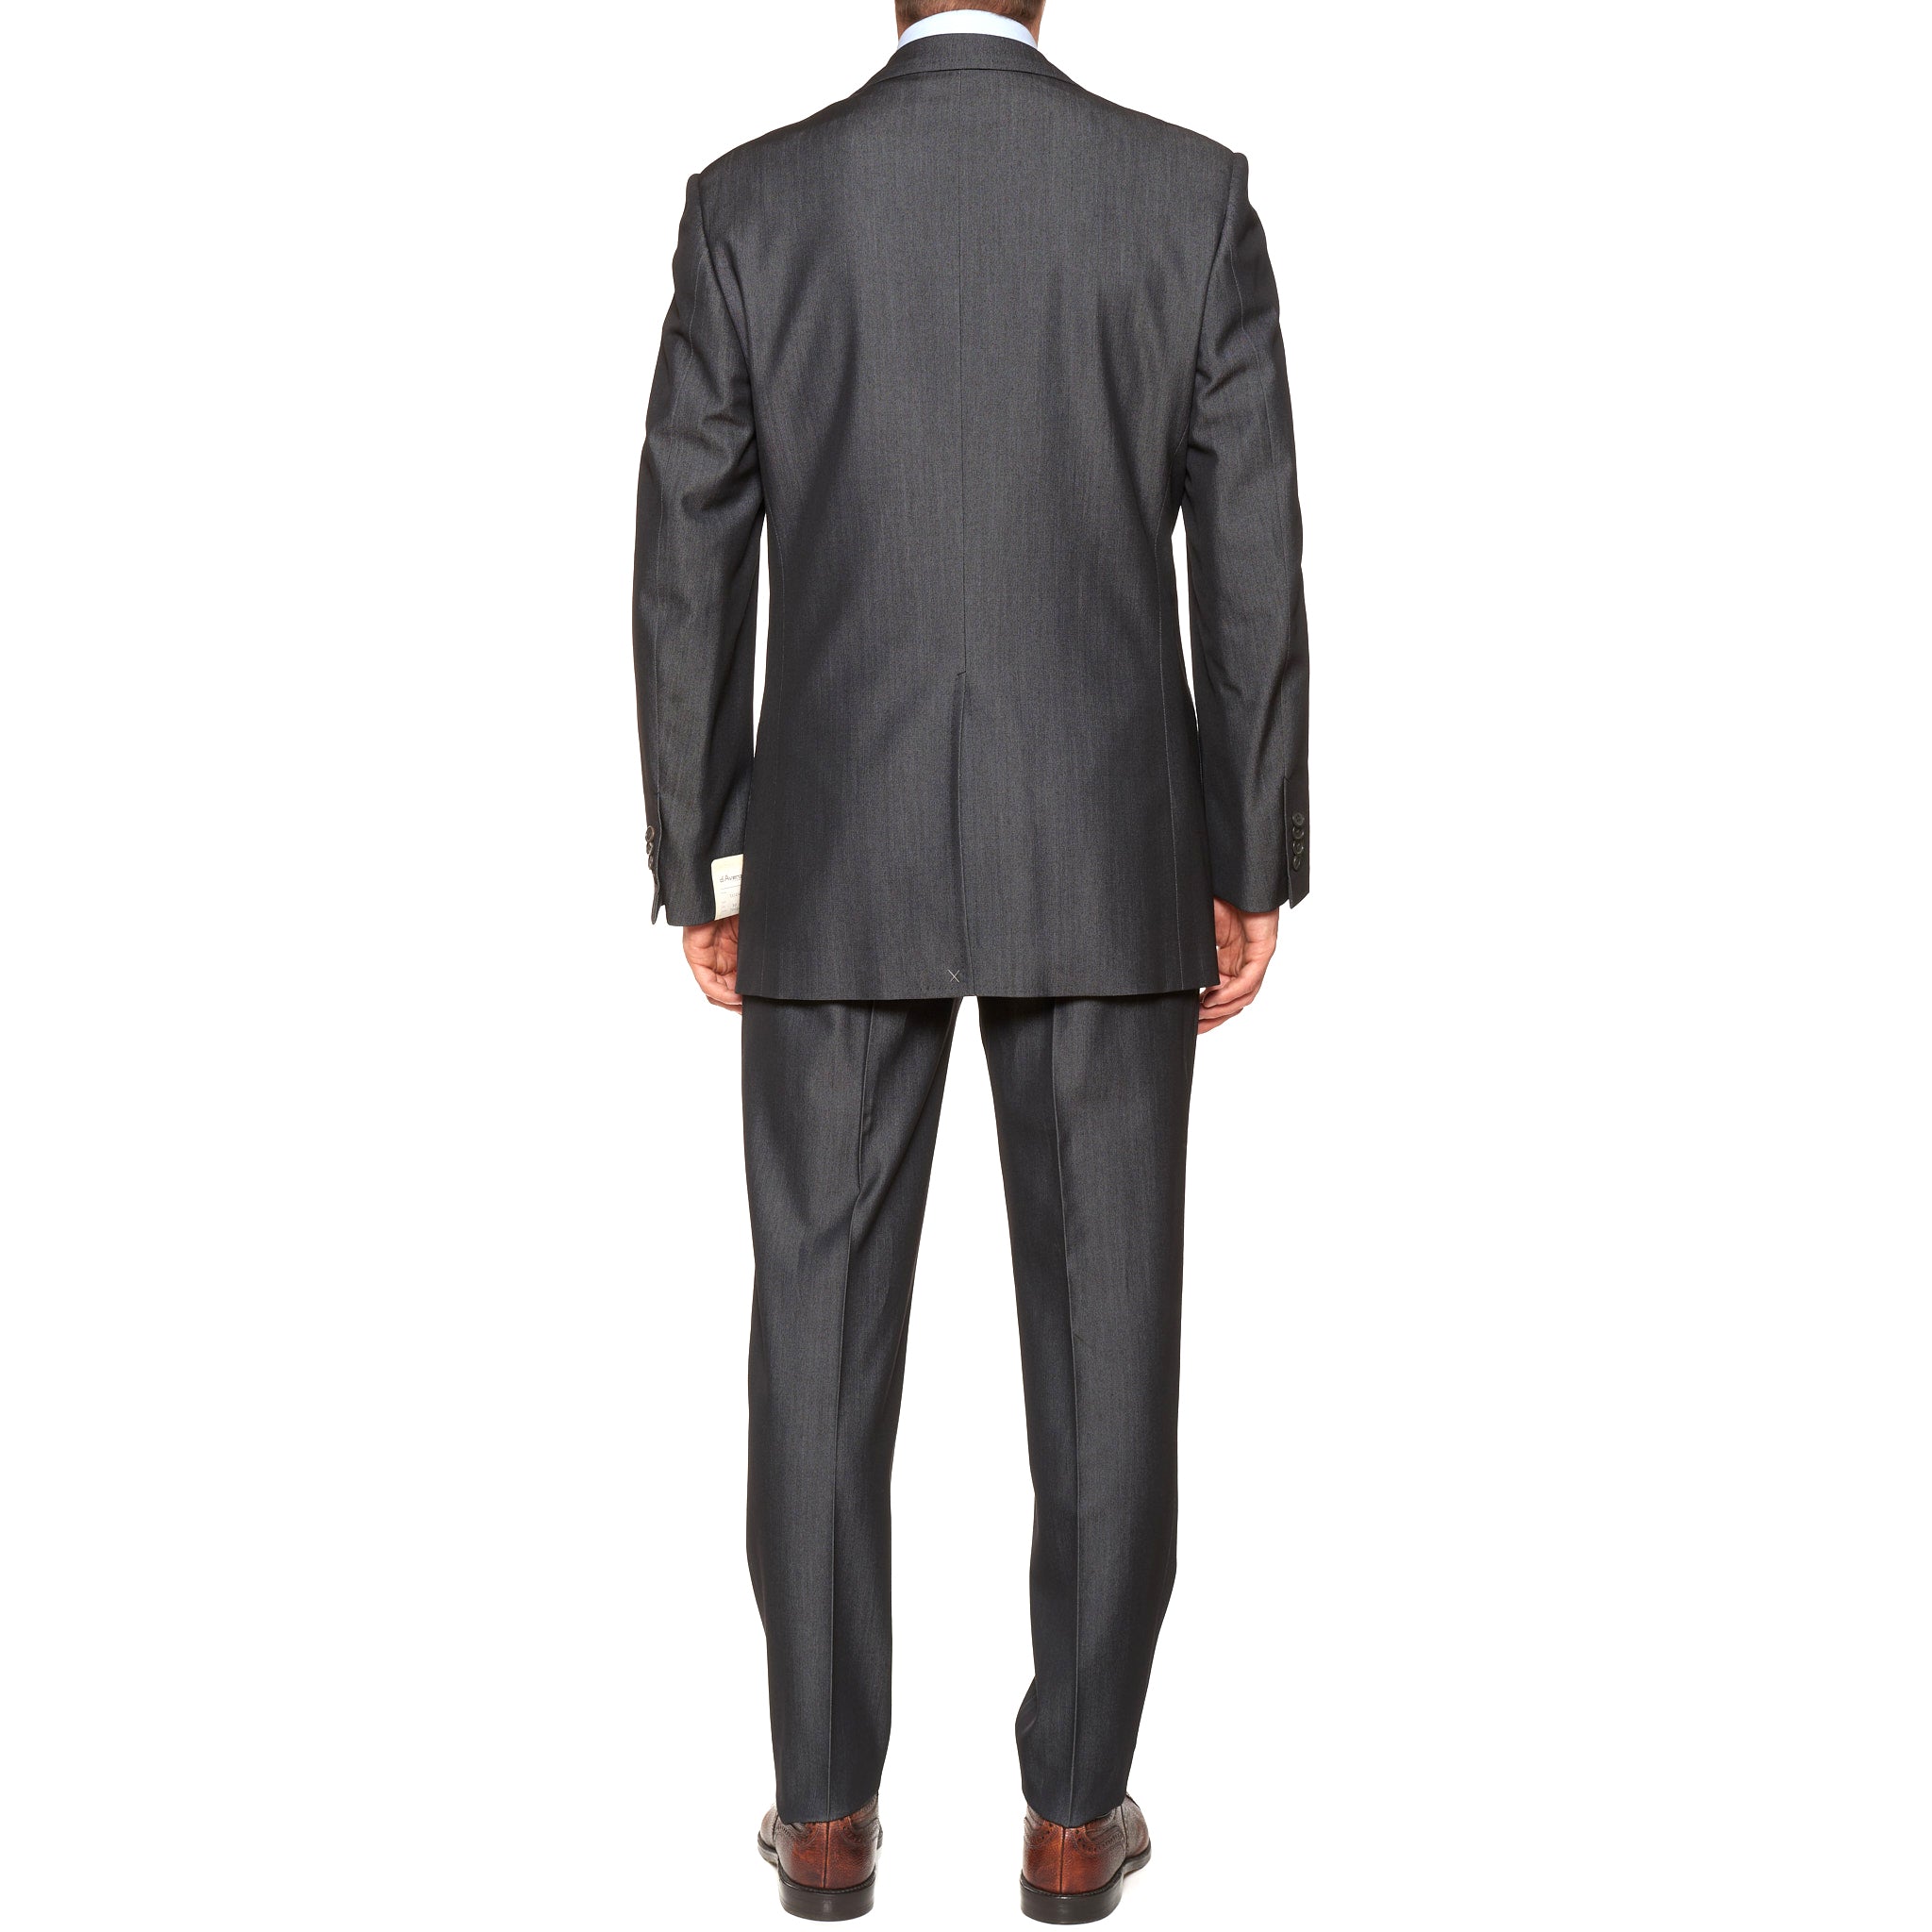 D'AVENZA Roma Handmade Gray Wool Blend Twill Suit EU 50 NEW US 40 D'AVENZA